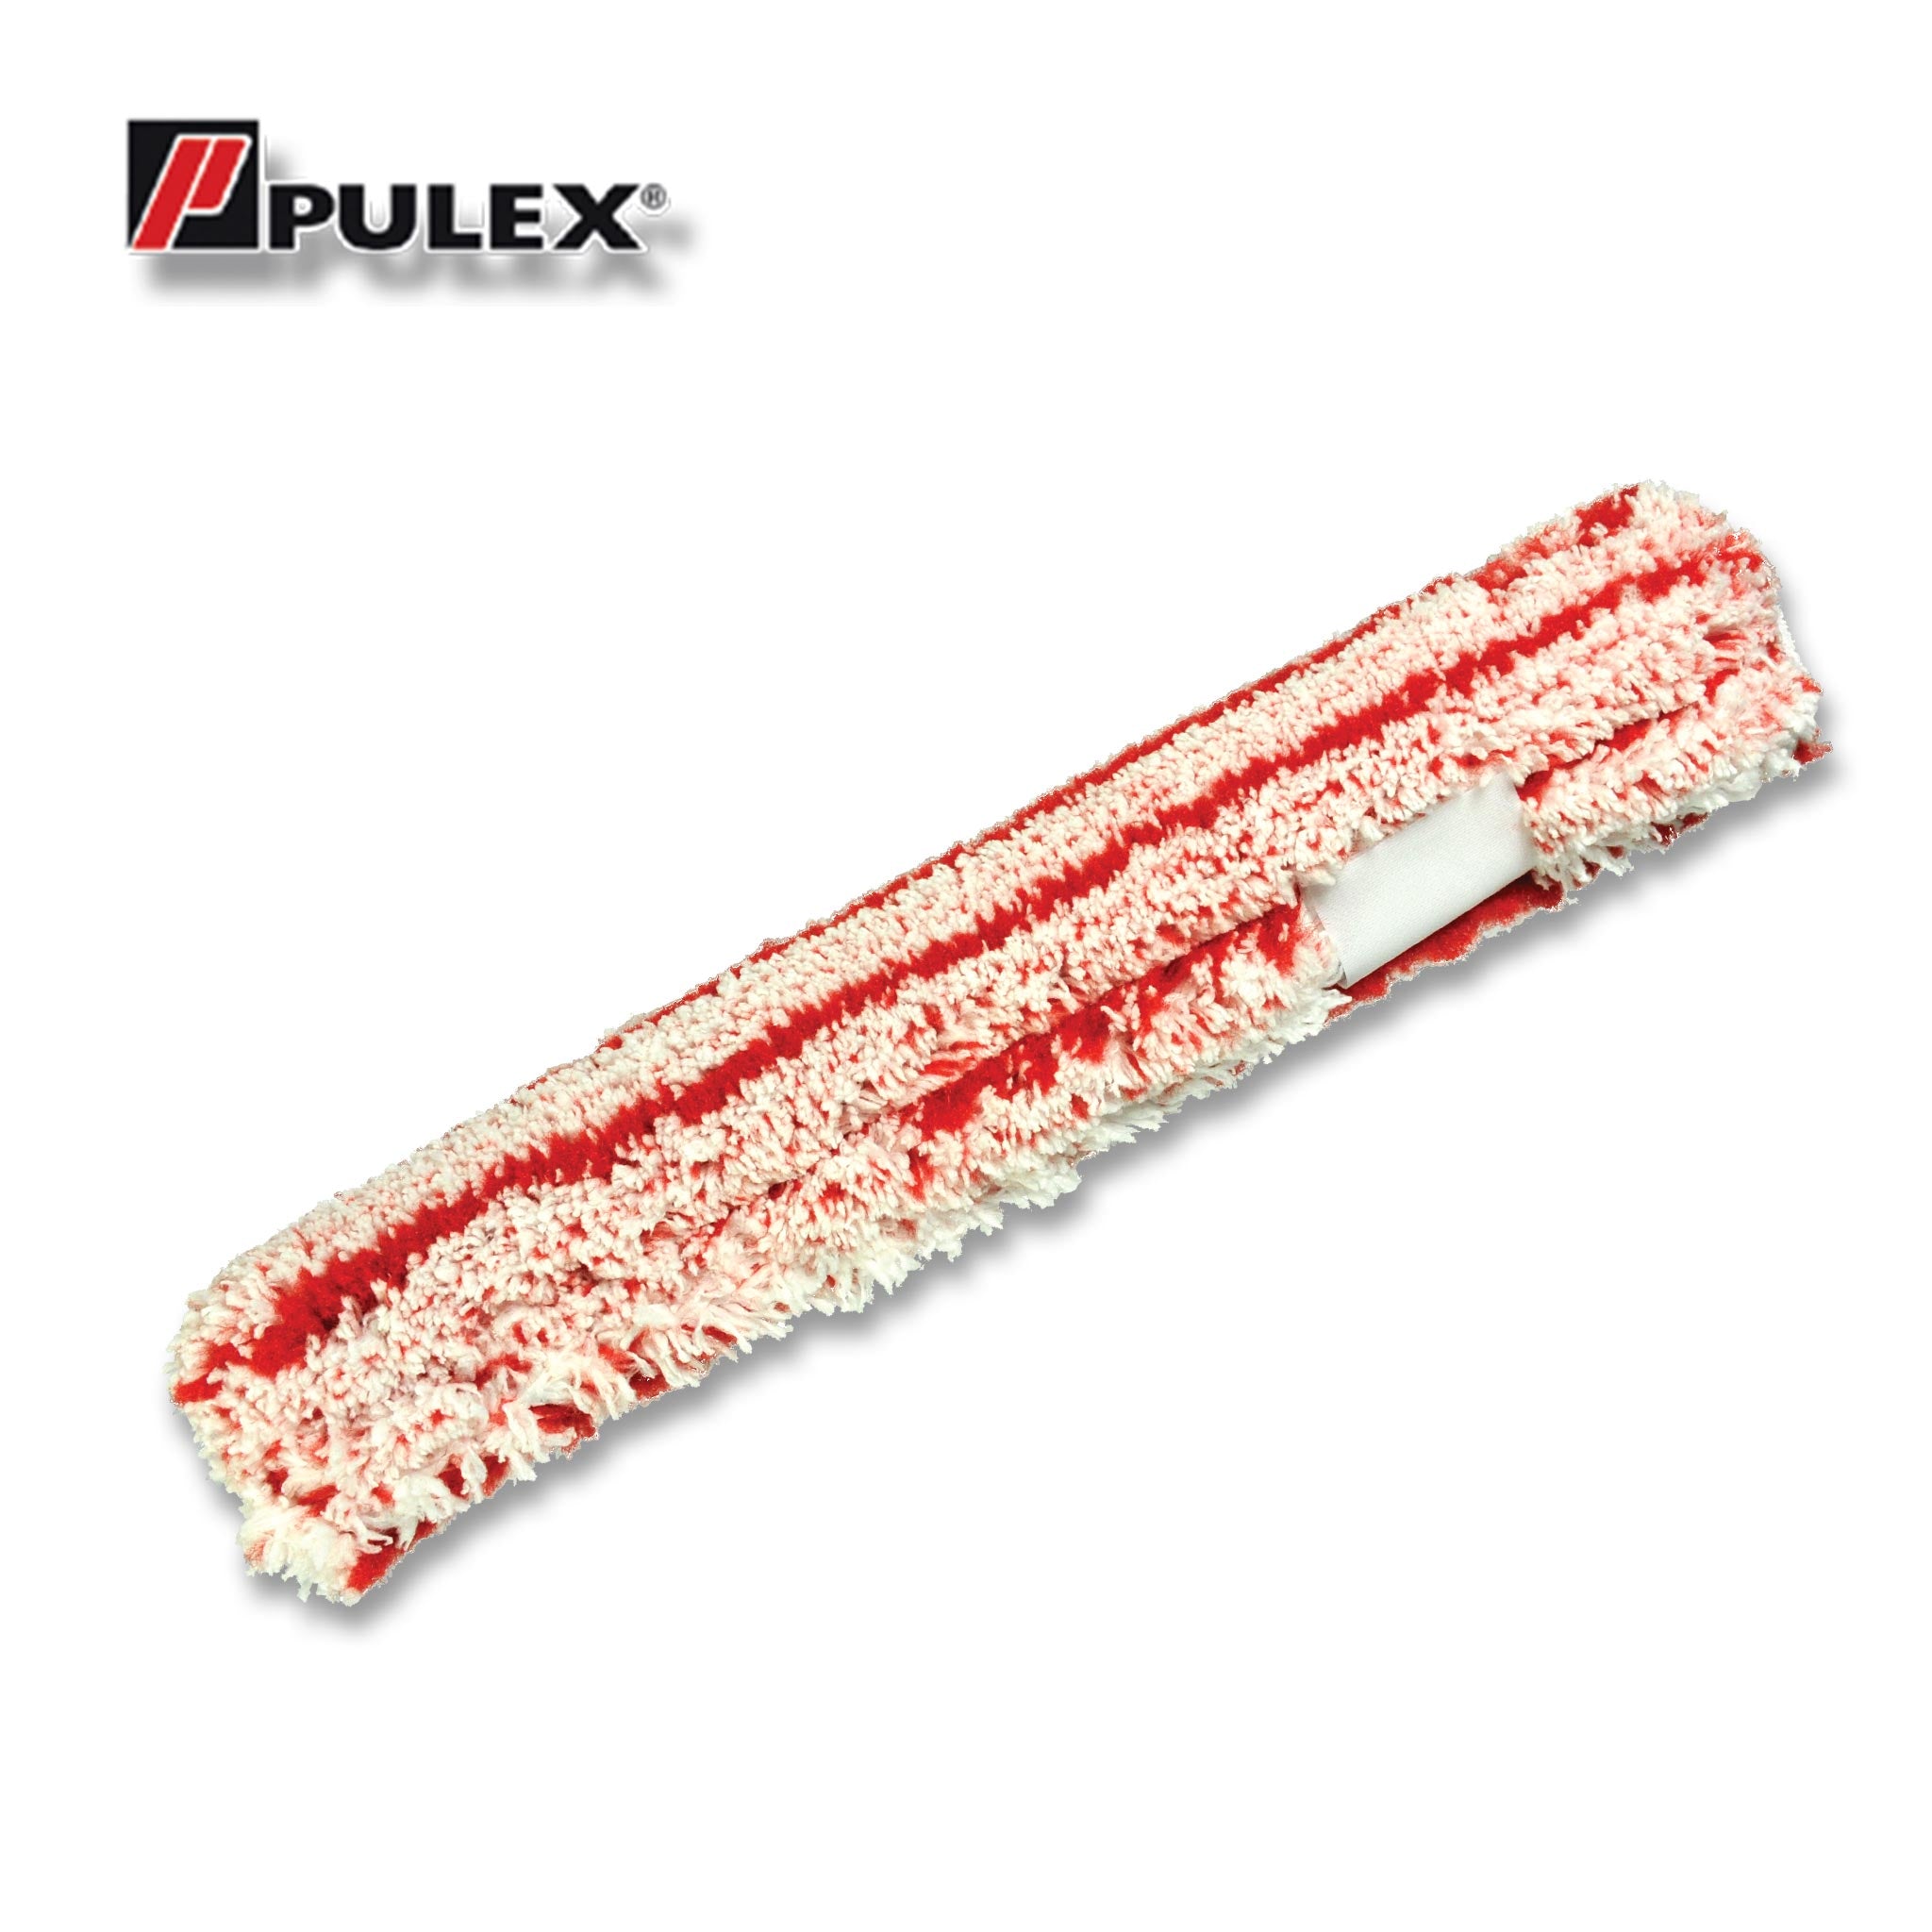 Pulex MicroTiger Washer Sleeve